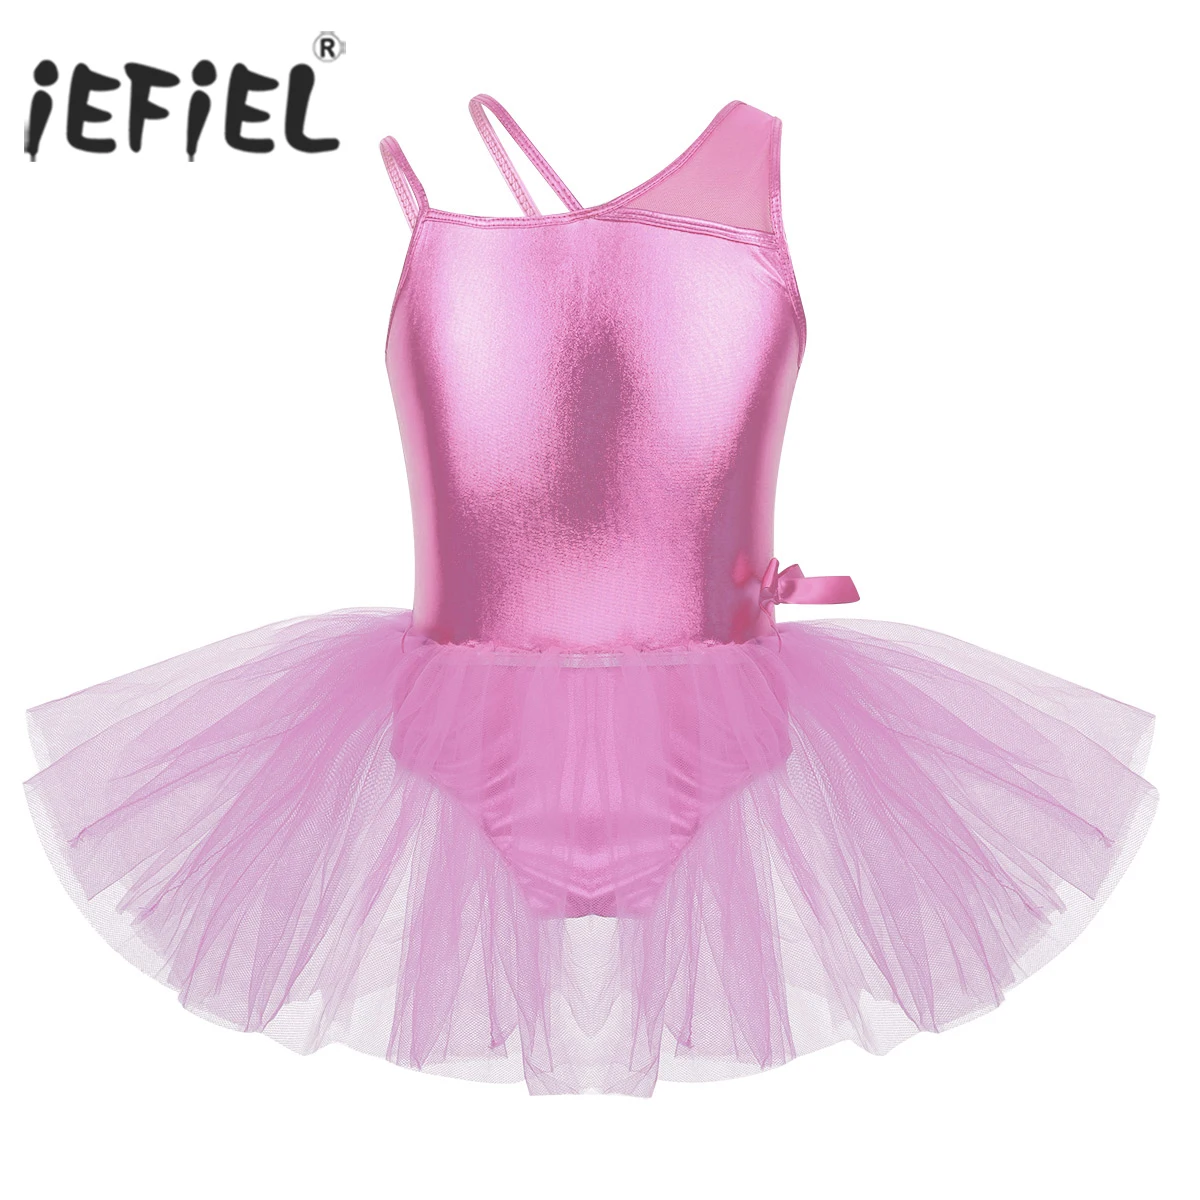 Yeahdor Kids Girls Snowflake Printed Ballerina Princess Ballet Tutu Leotard Dress Dancewear Party Fancy Costumes 